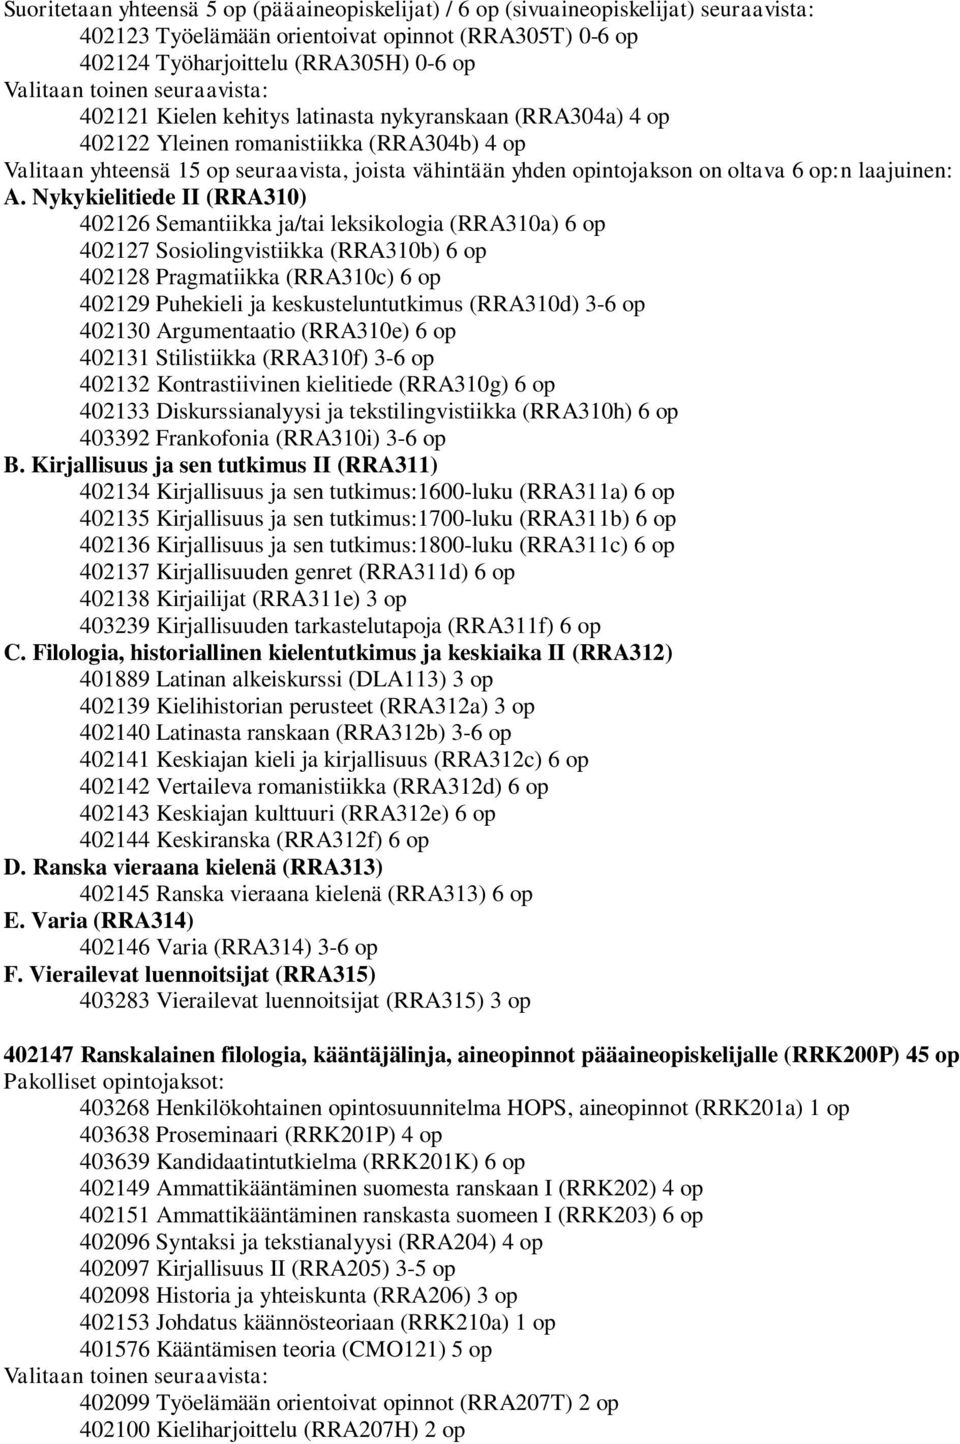 Nykykielitiede II (RRA310) 402126 Semantiikka ja/tai leksikologia (RRA310a) 6 op 402127 Sosiolingvistiikka (RRA310b) 6 op 402128 Pragmatiikka (RRA310c) 6 op 402129 Puhekieli ja keskusteluntutkimus